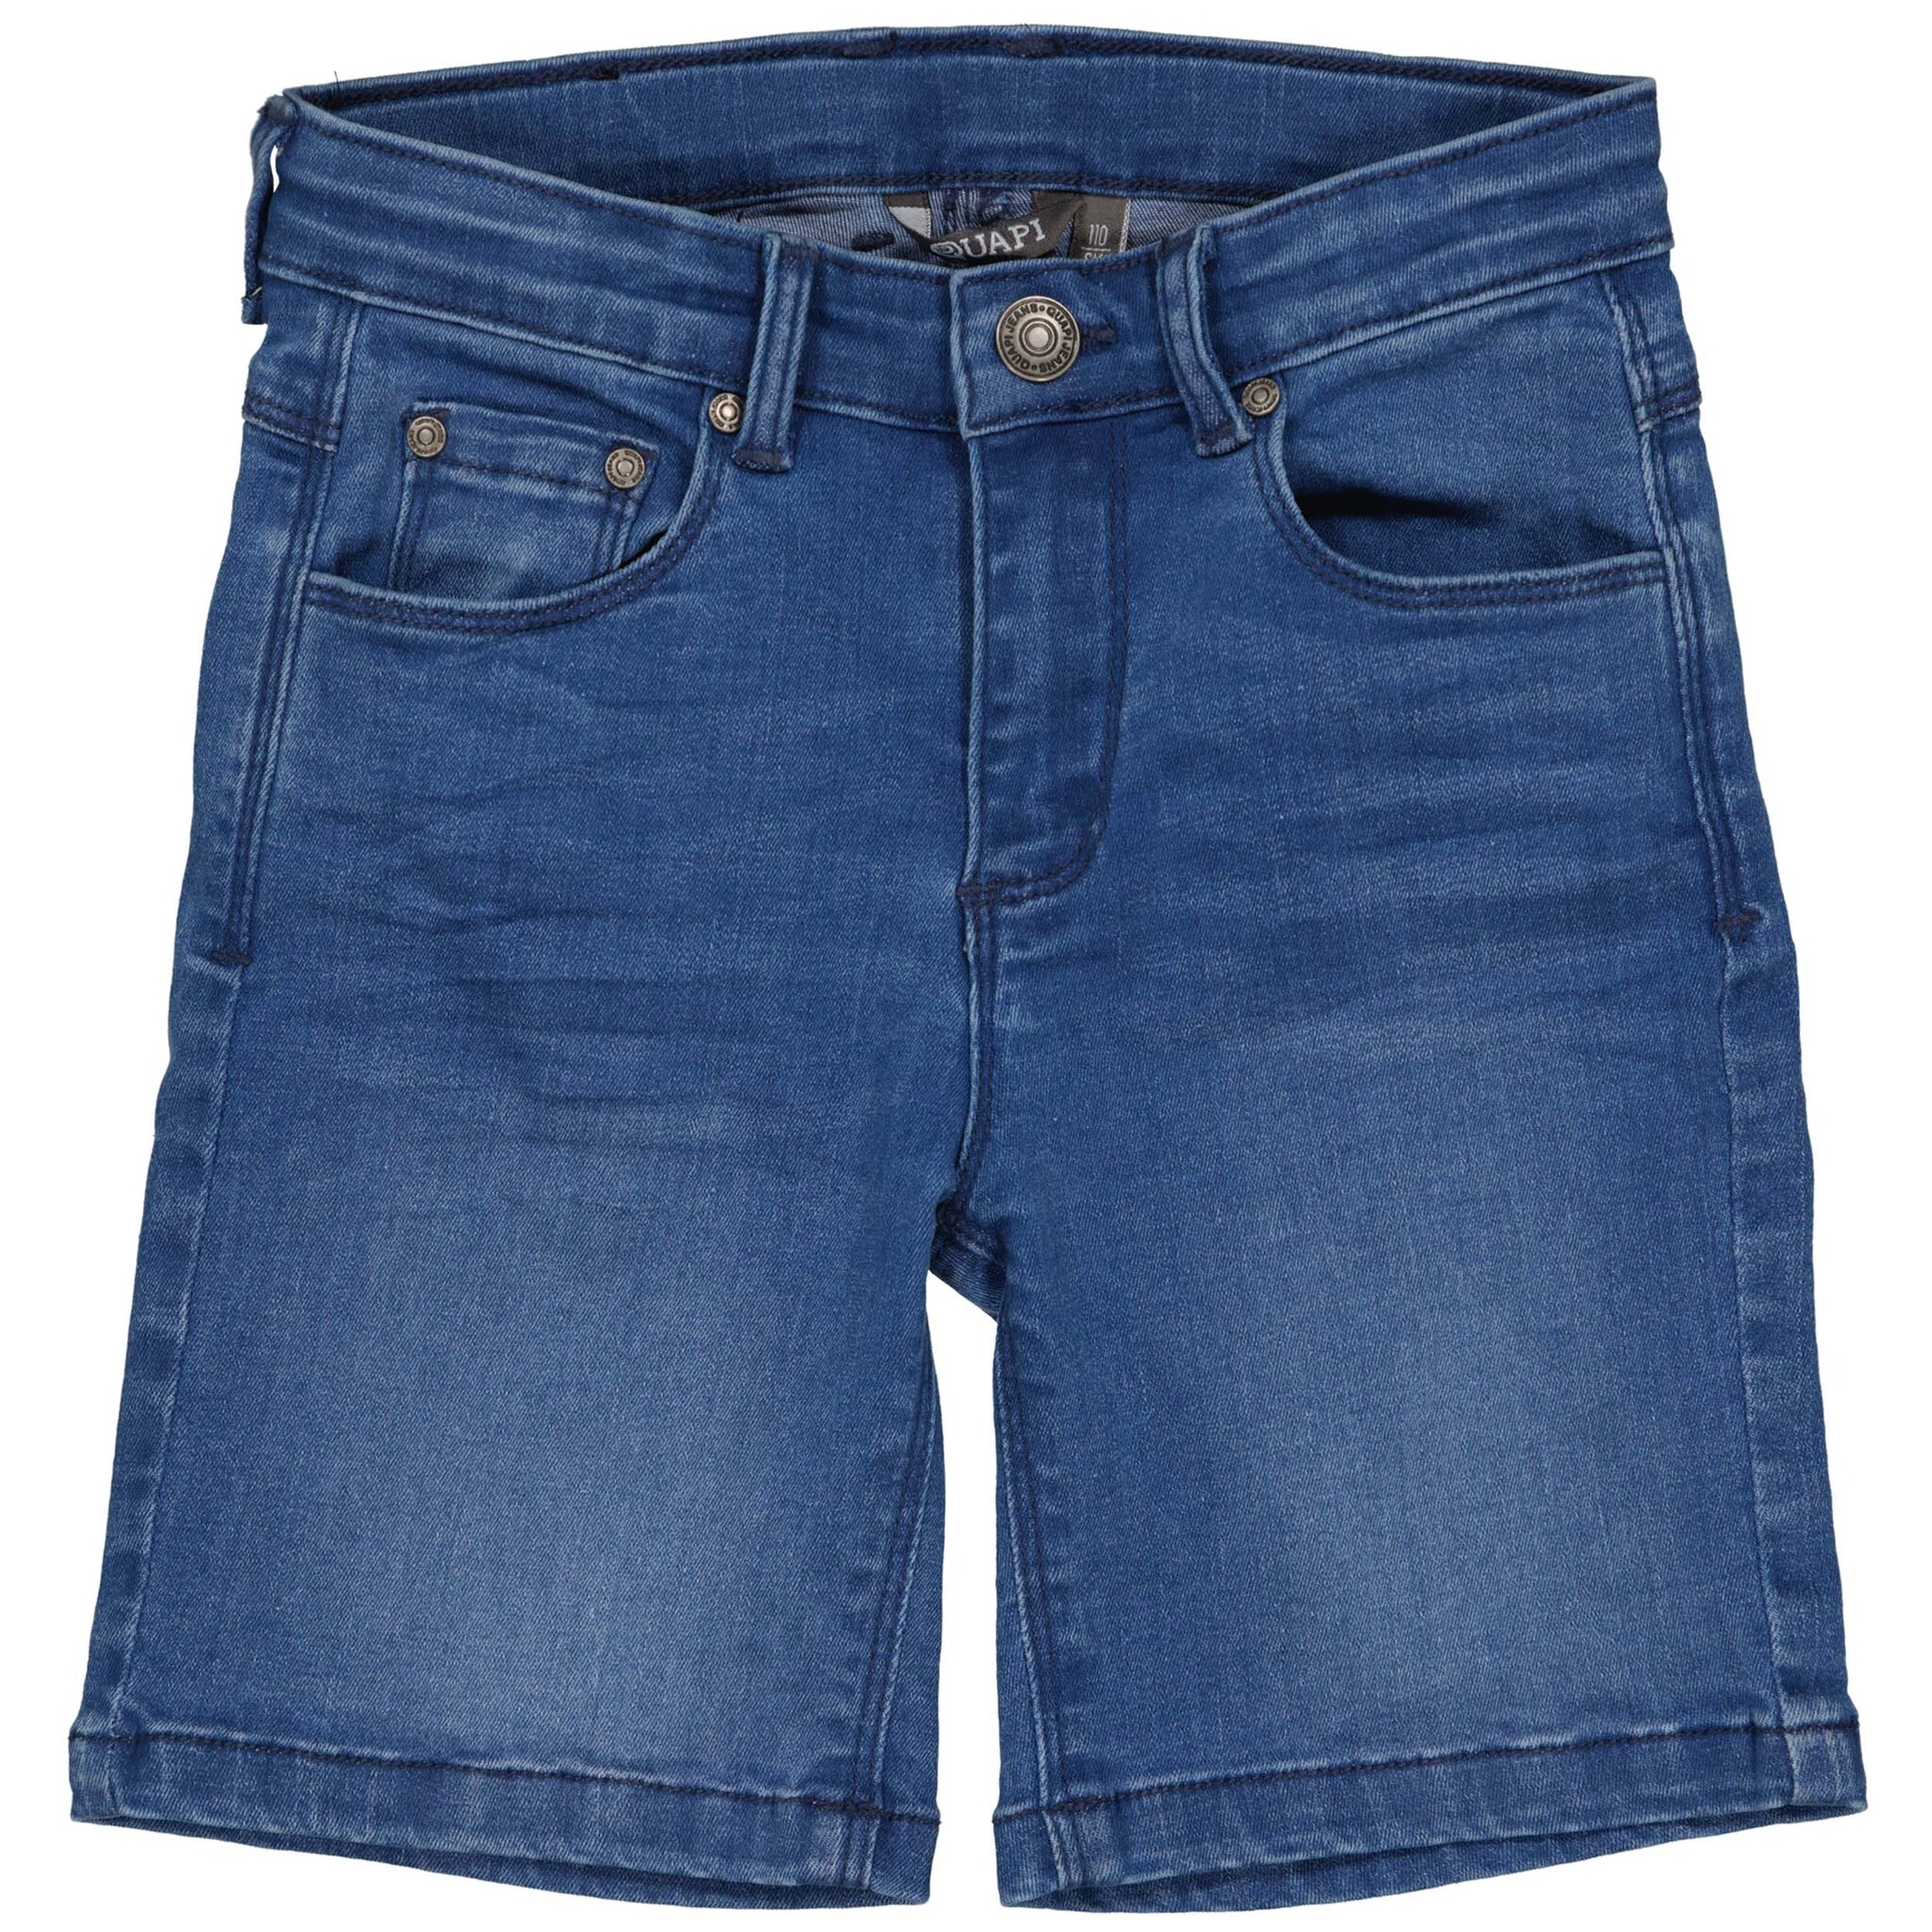 Quapi Jongens jeans short - Buse - Blauw